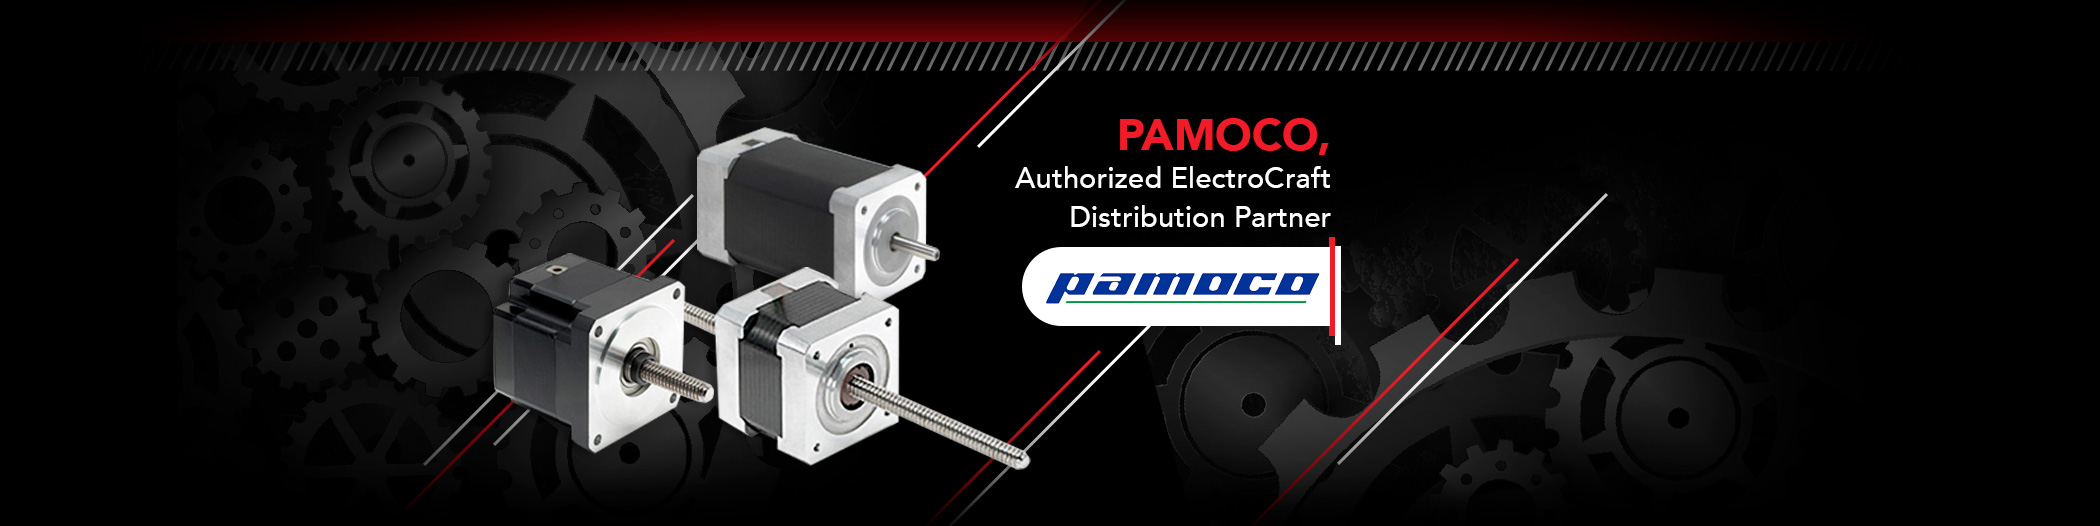 Authorized ElectroCraft Distribution Partner: Pamoco